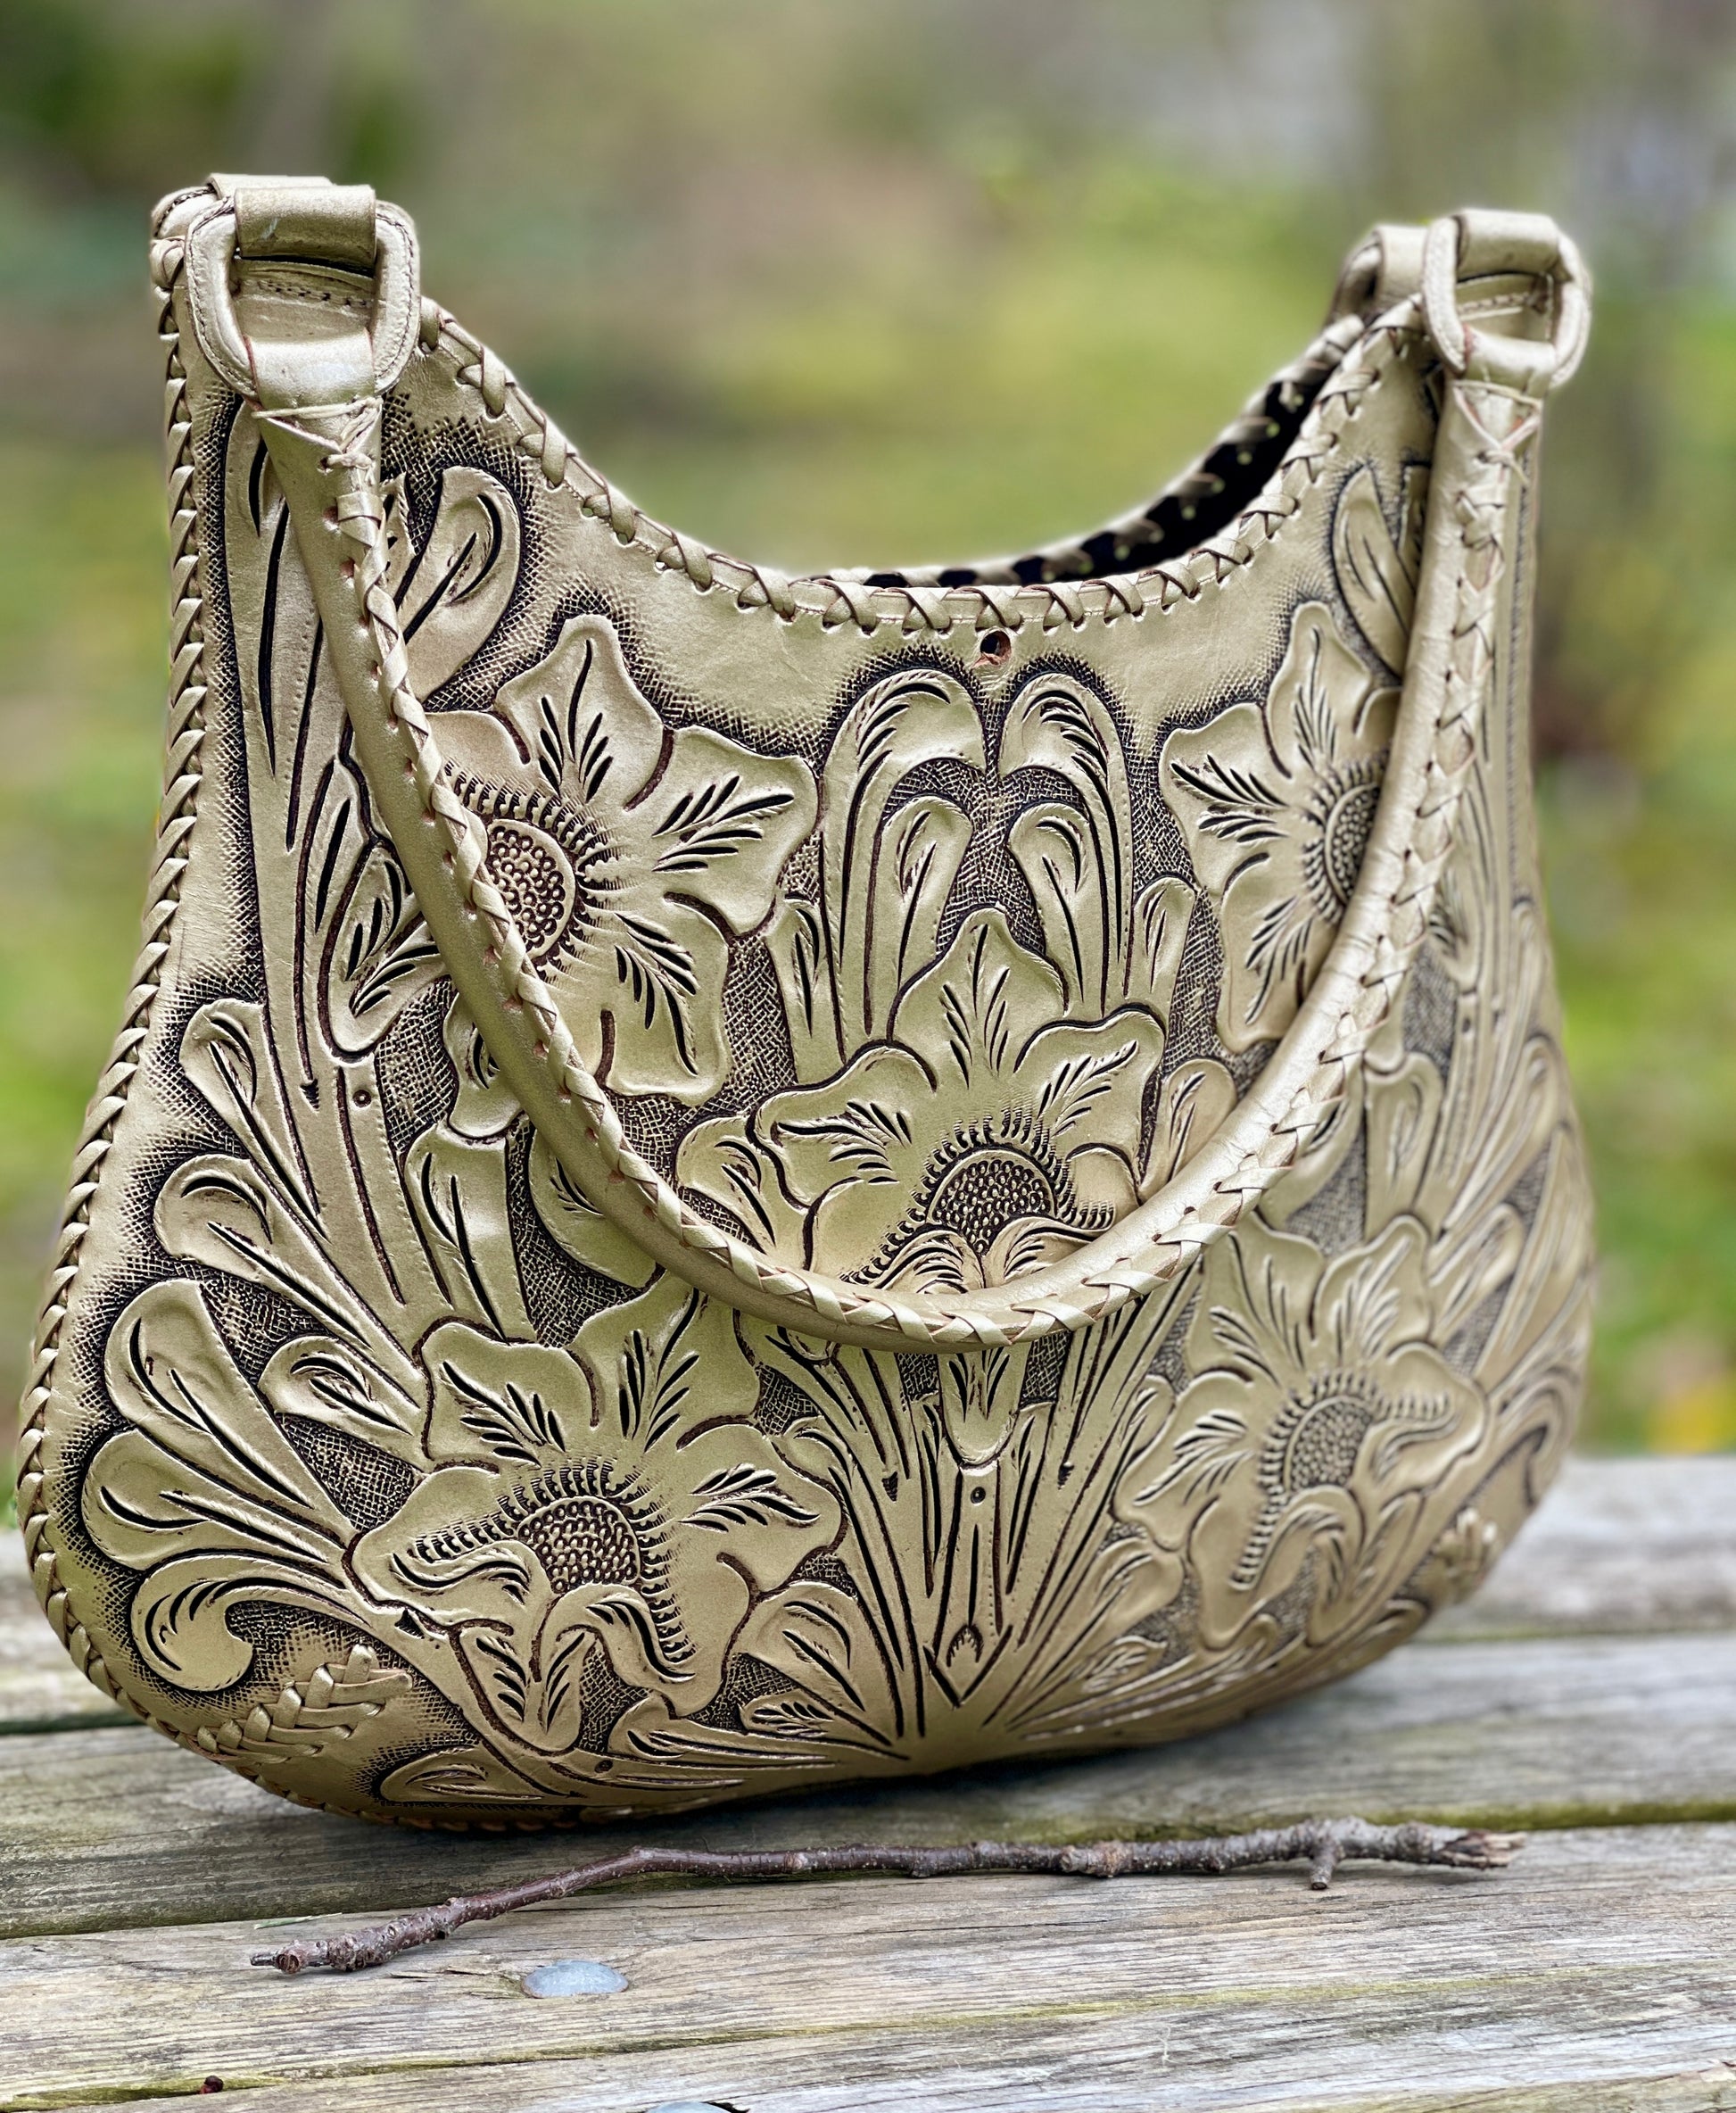 Hand Tooled Leather Shoulder Bag, "MIROSLAVA" by ALLE - ALLE Handbags